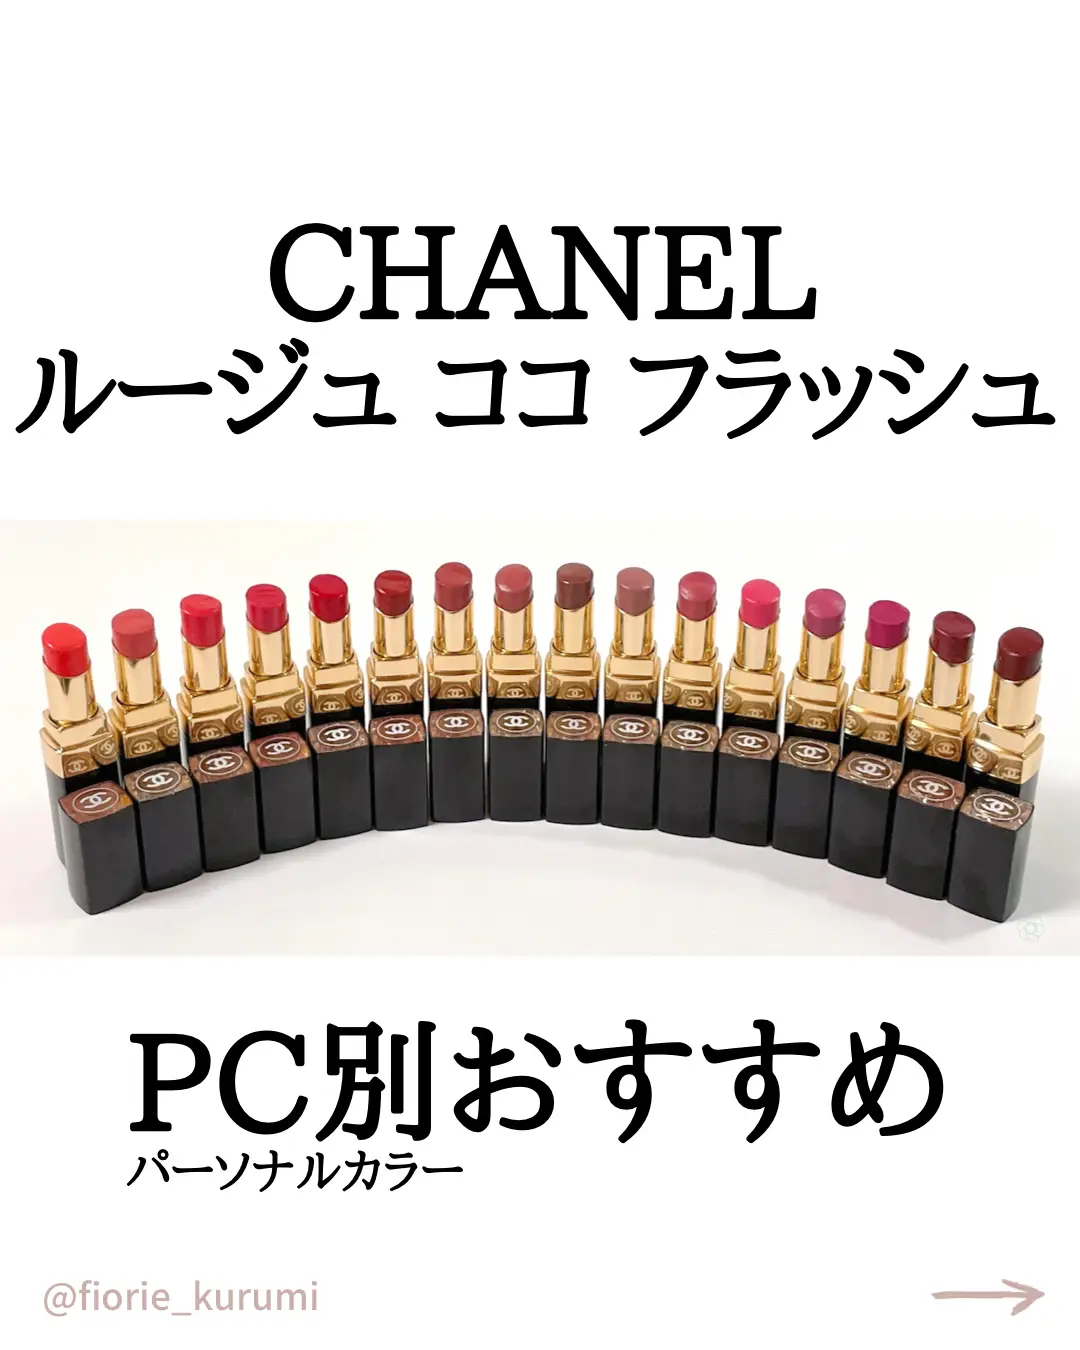 MakeUpVitamins: Chanel Teheran Rouge Coco Lipstick Swatch & Review